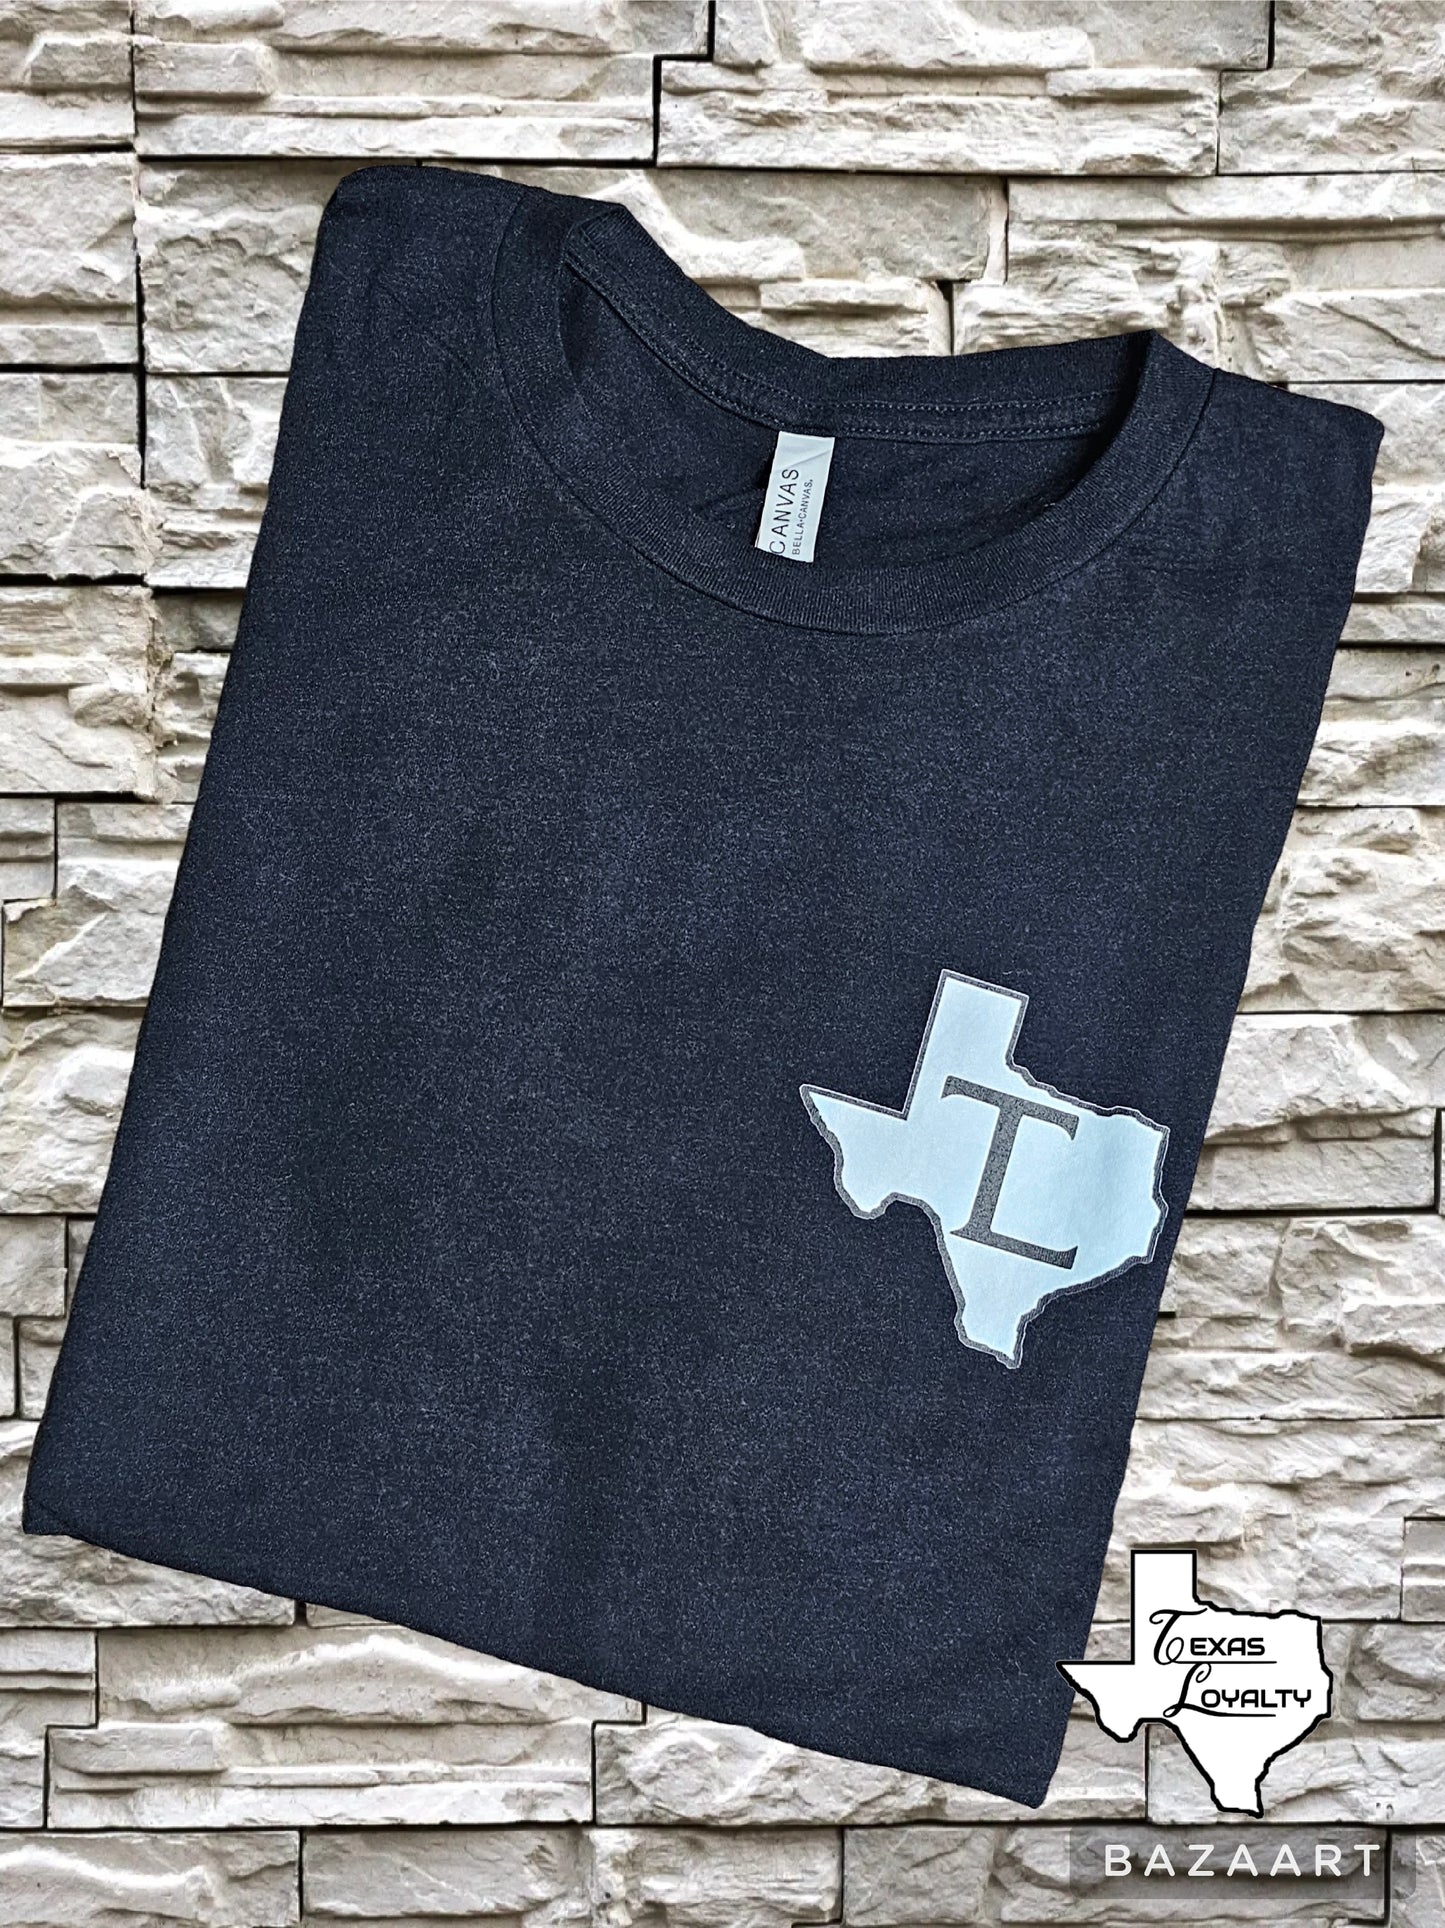 Texas Loyalty - Freedom Shield